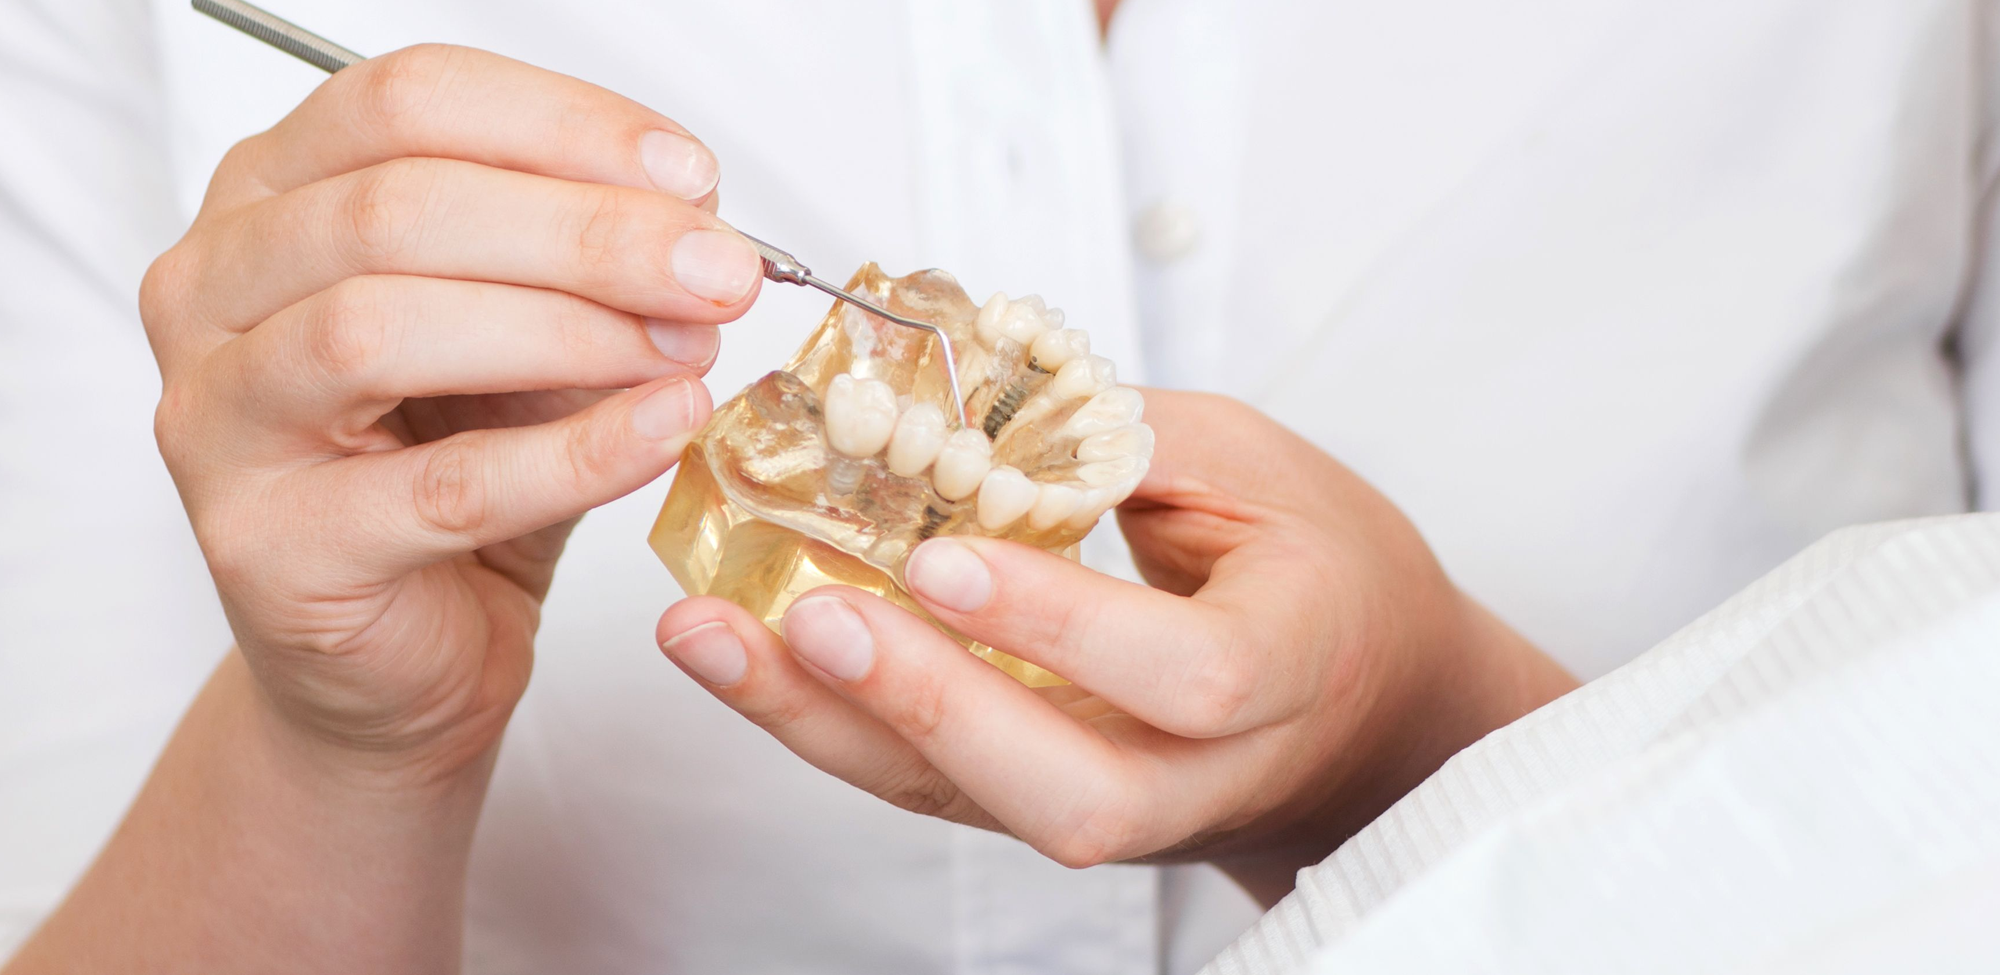 Preventing loose dental implants